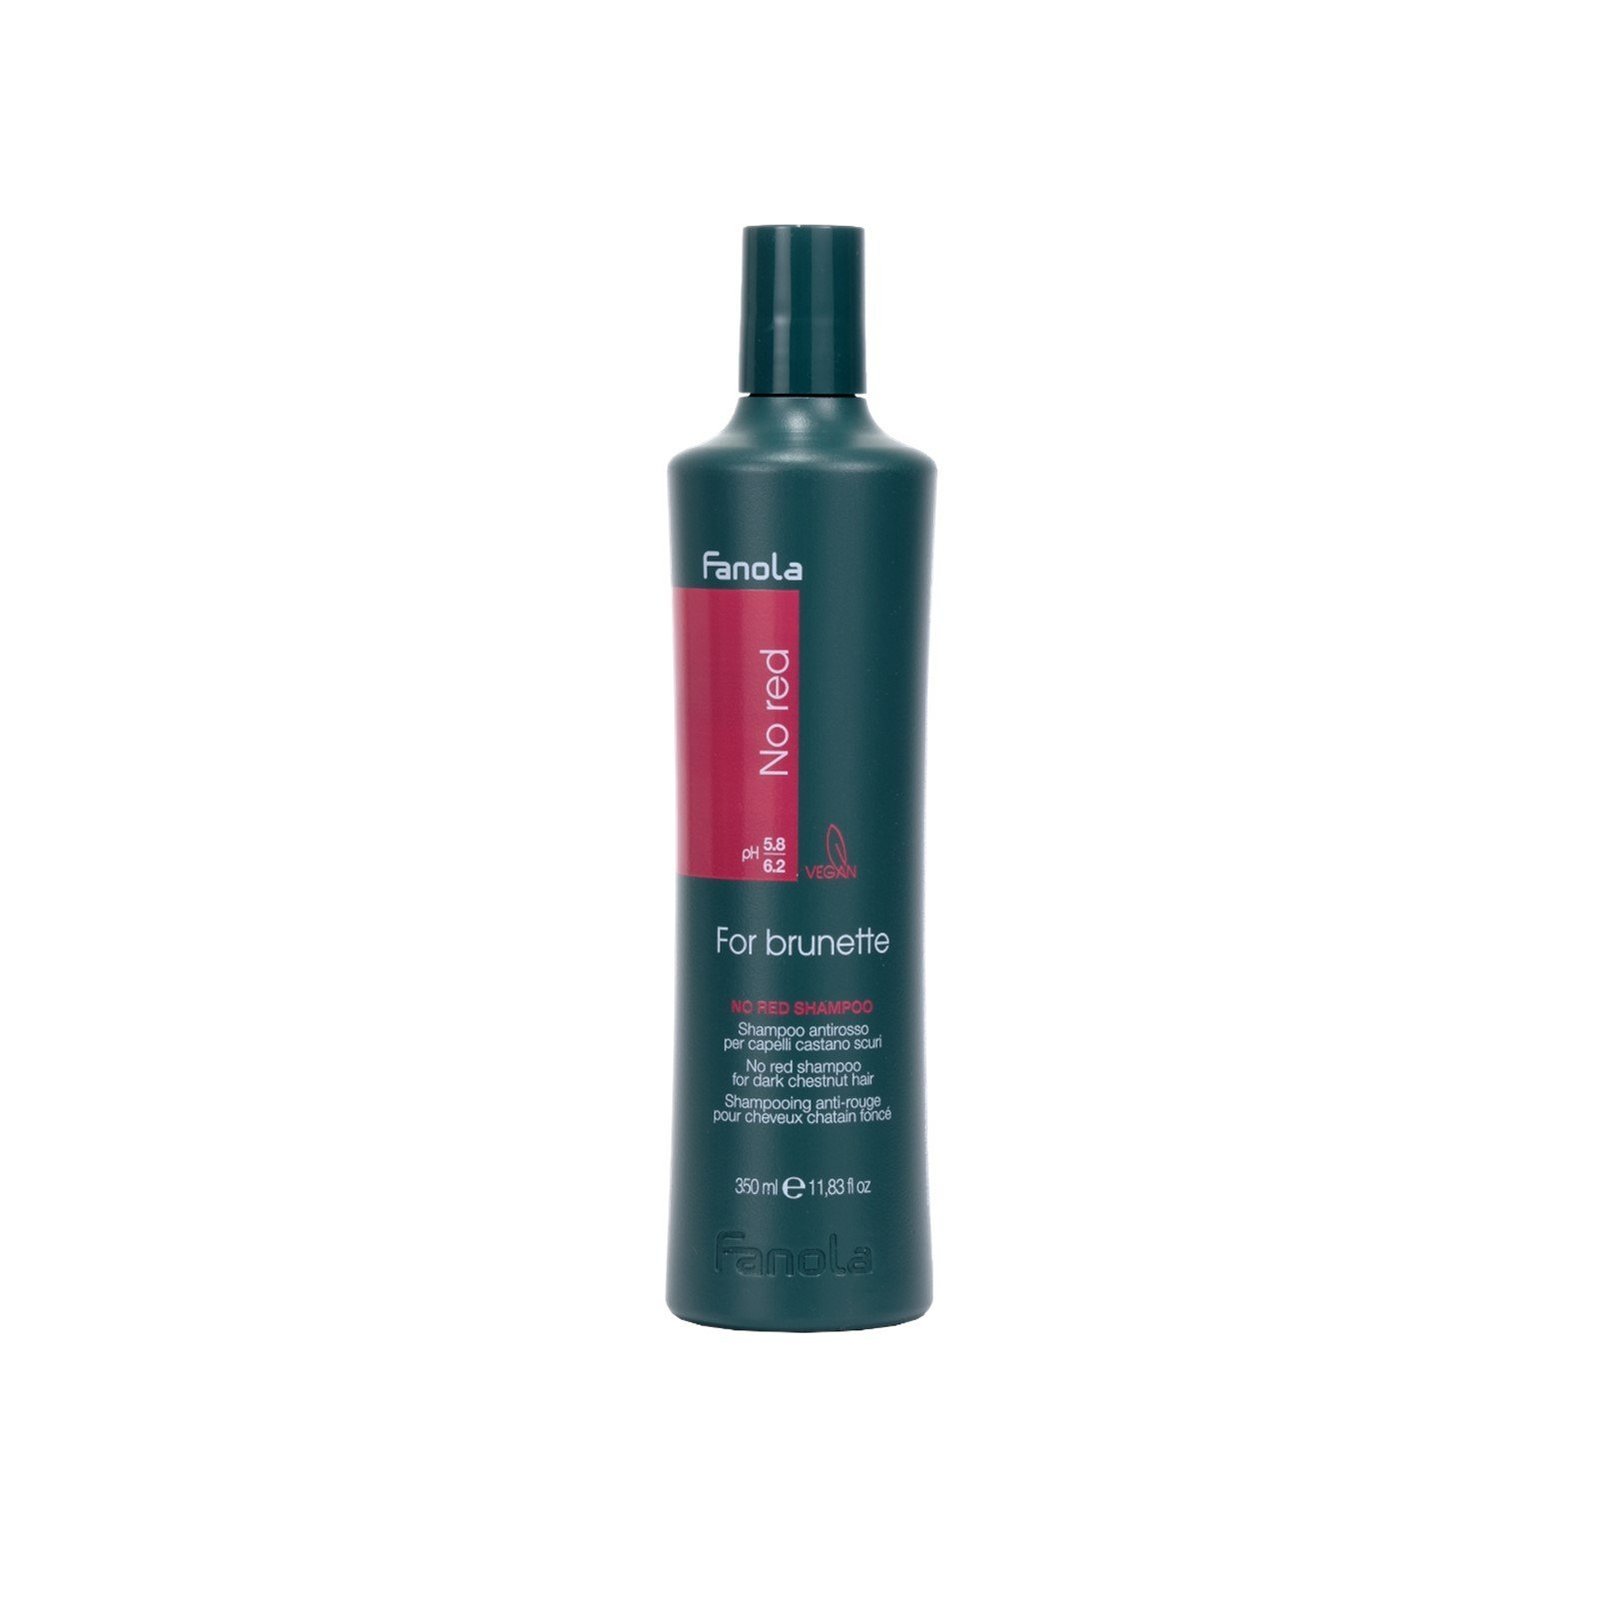 Fanola No Red Shampoo For Brunette 350ml (11.83 fl oz)